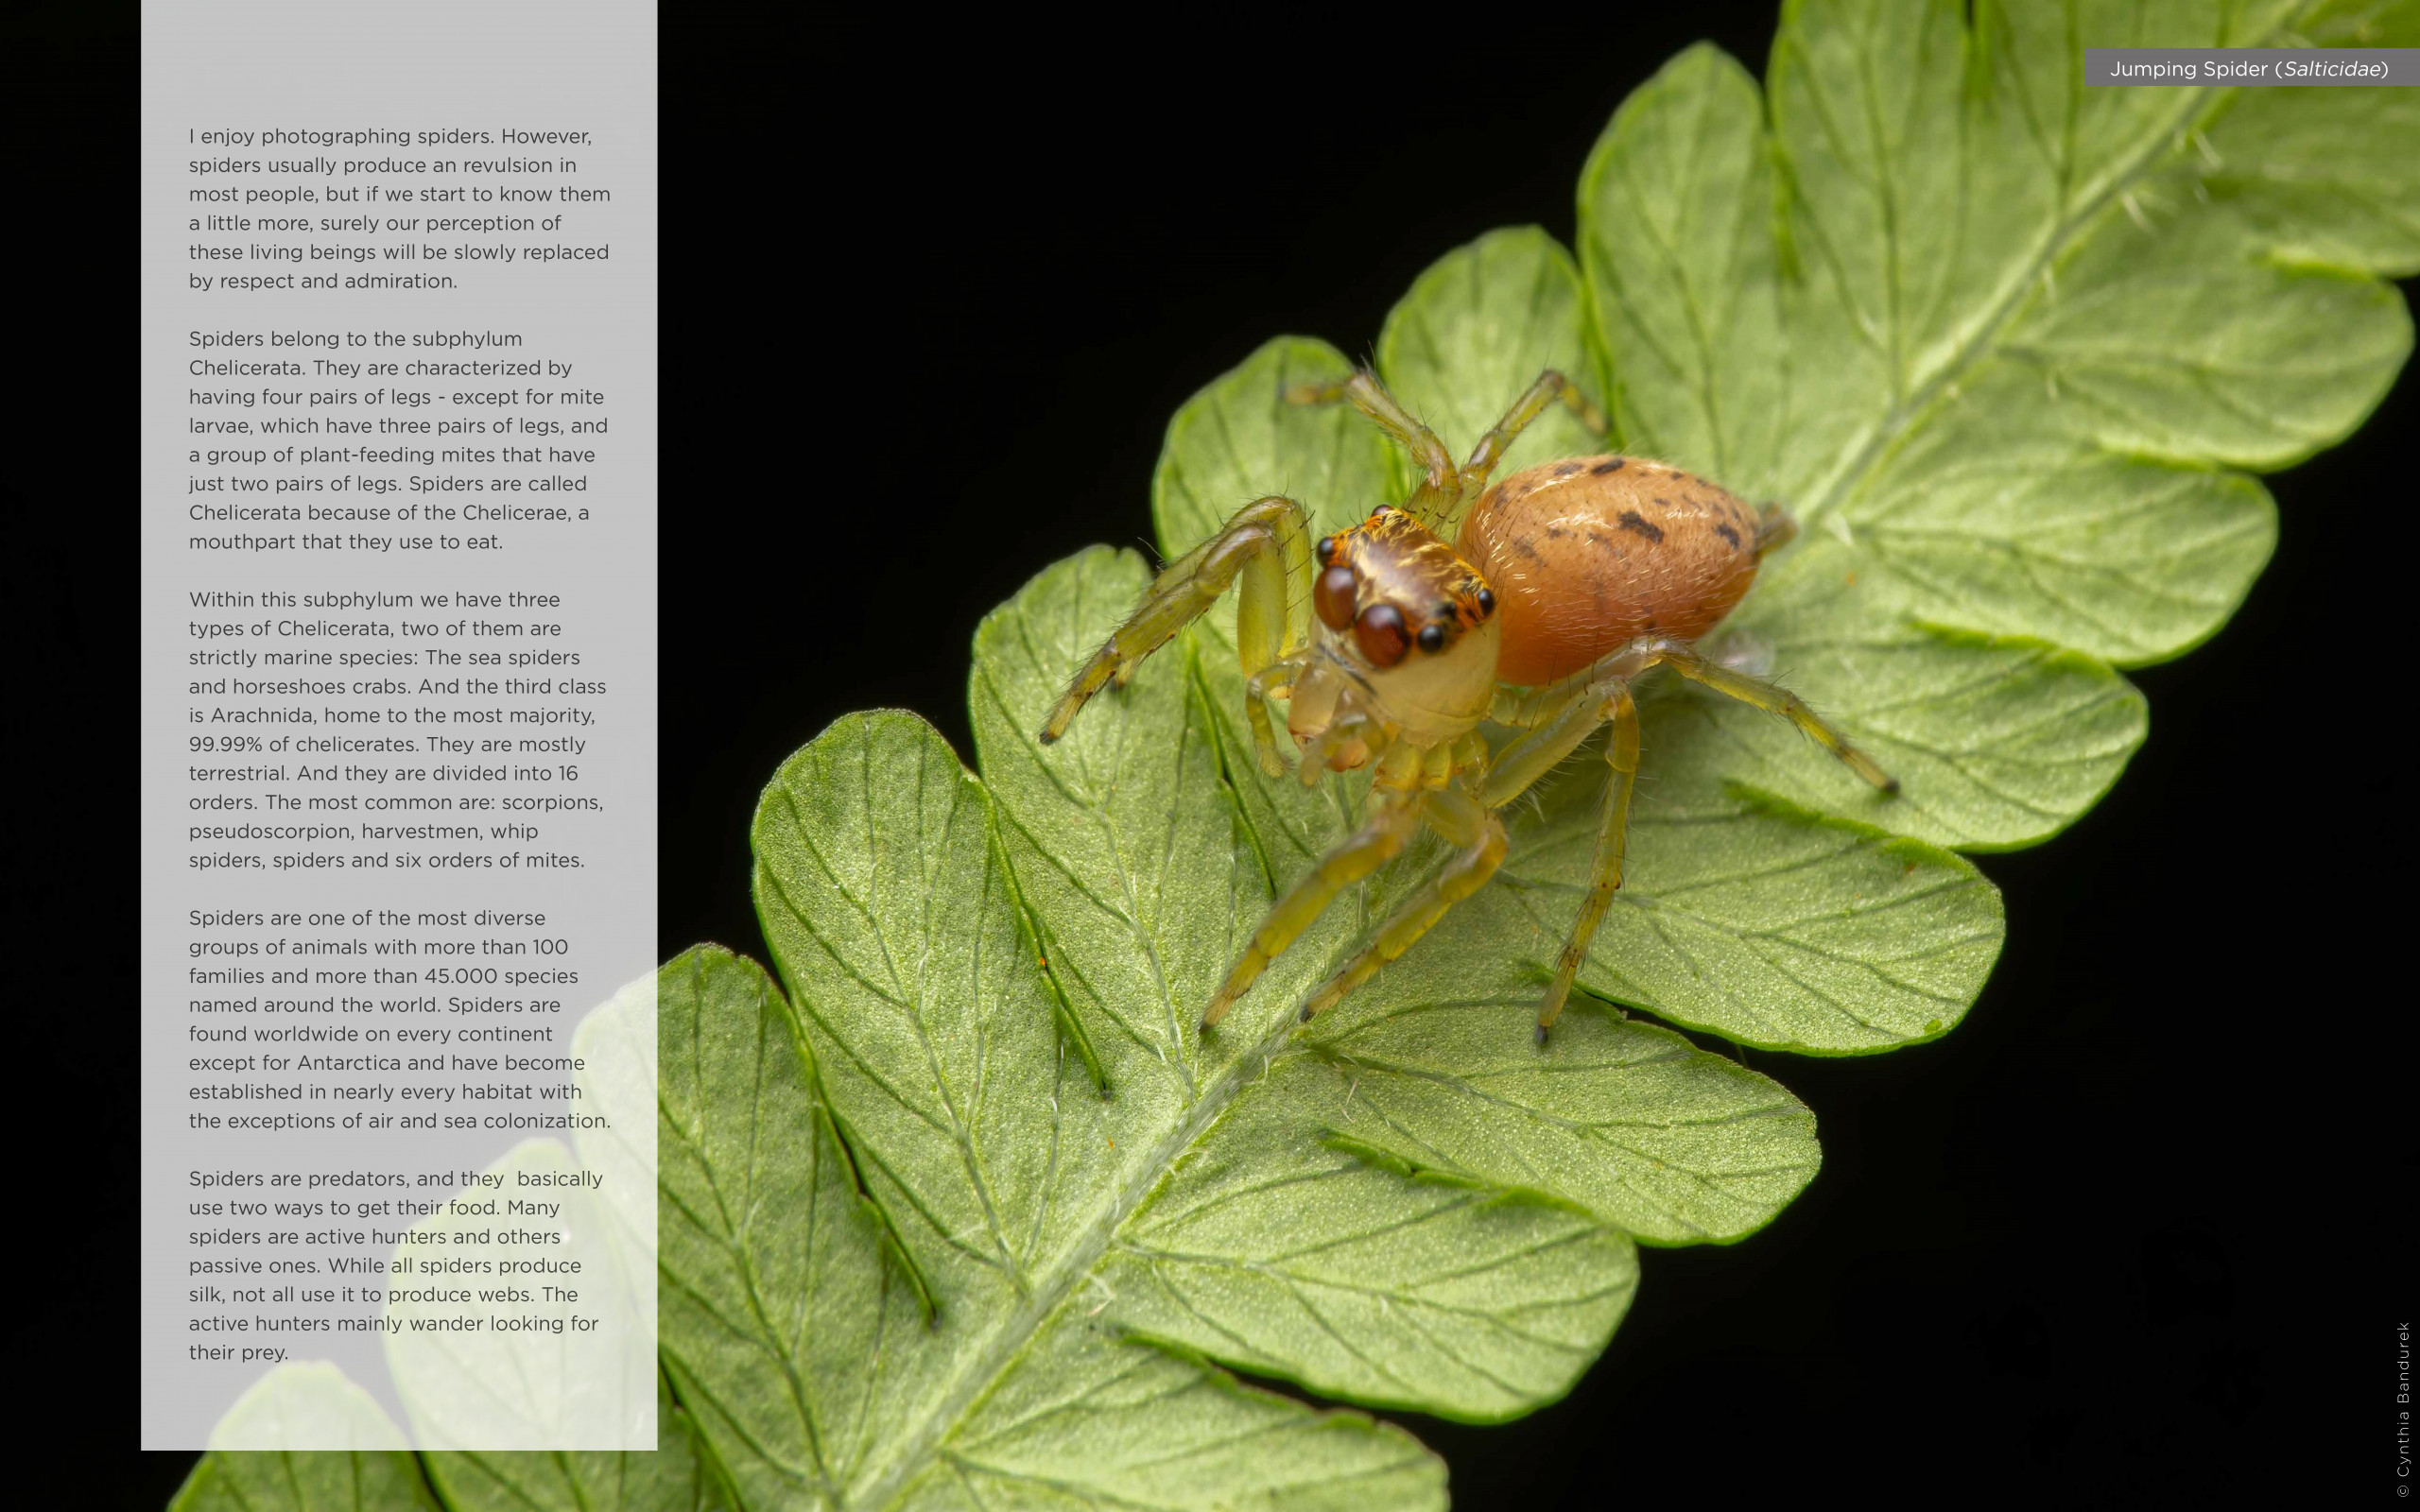 Spiders – Amazing World of Eight legged Animals - Paws Trails • Cynthia  Bandurek